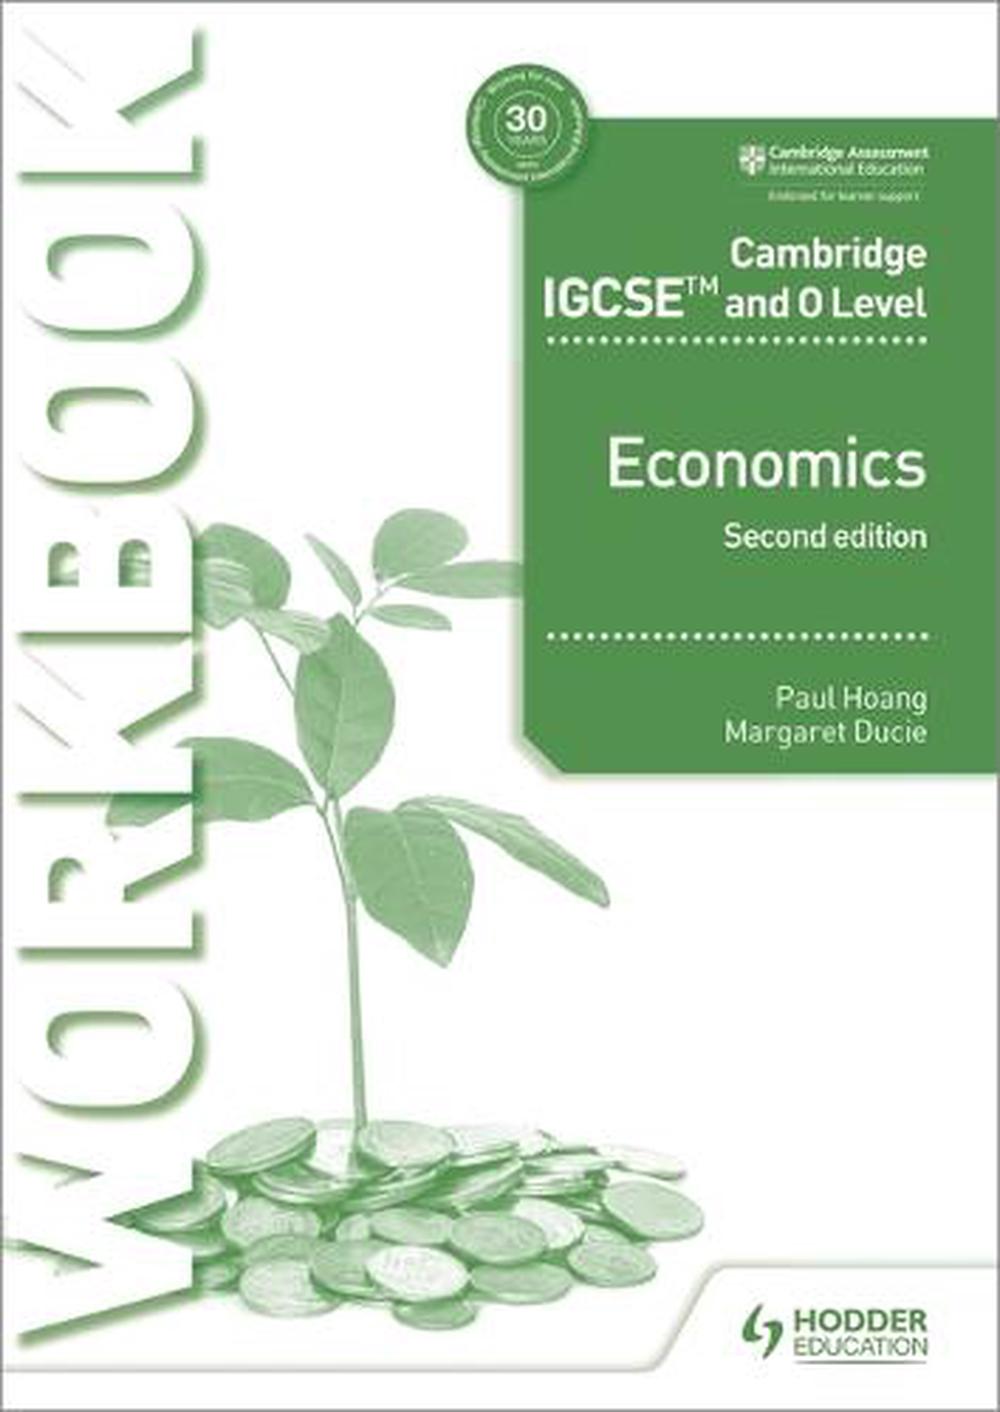 Cambridge Igcse and O Level Economics Workbook 2nd Edition by Paul